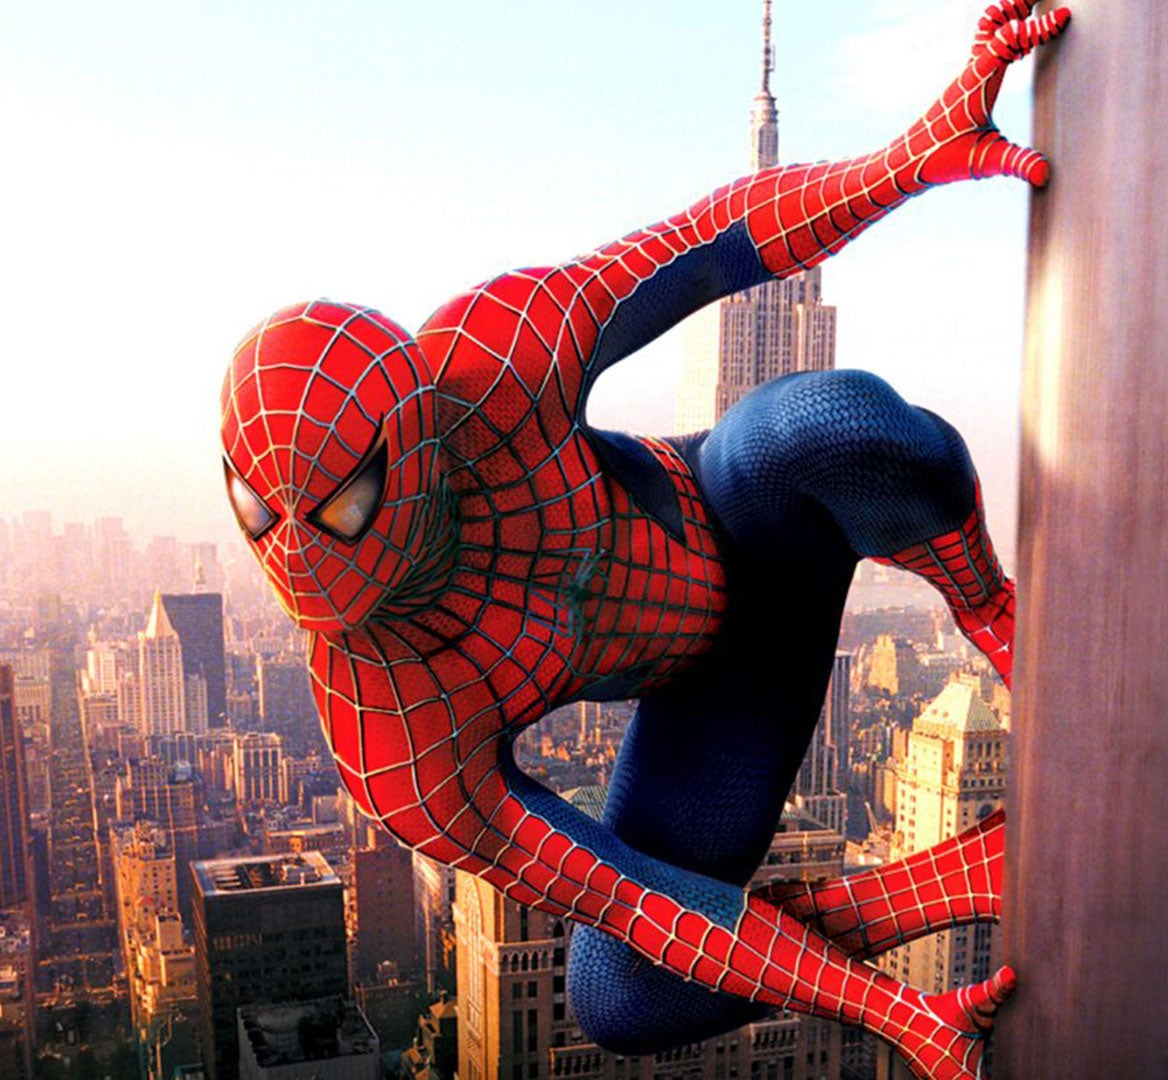 Tobey Maguire in "Spider-Man" on Vudu